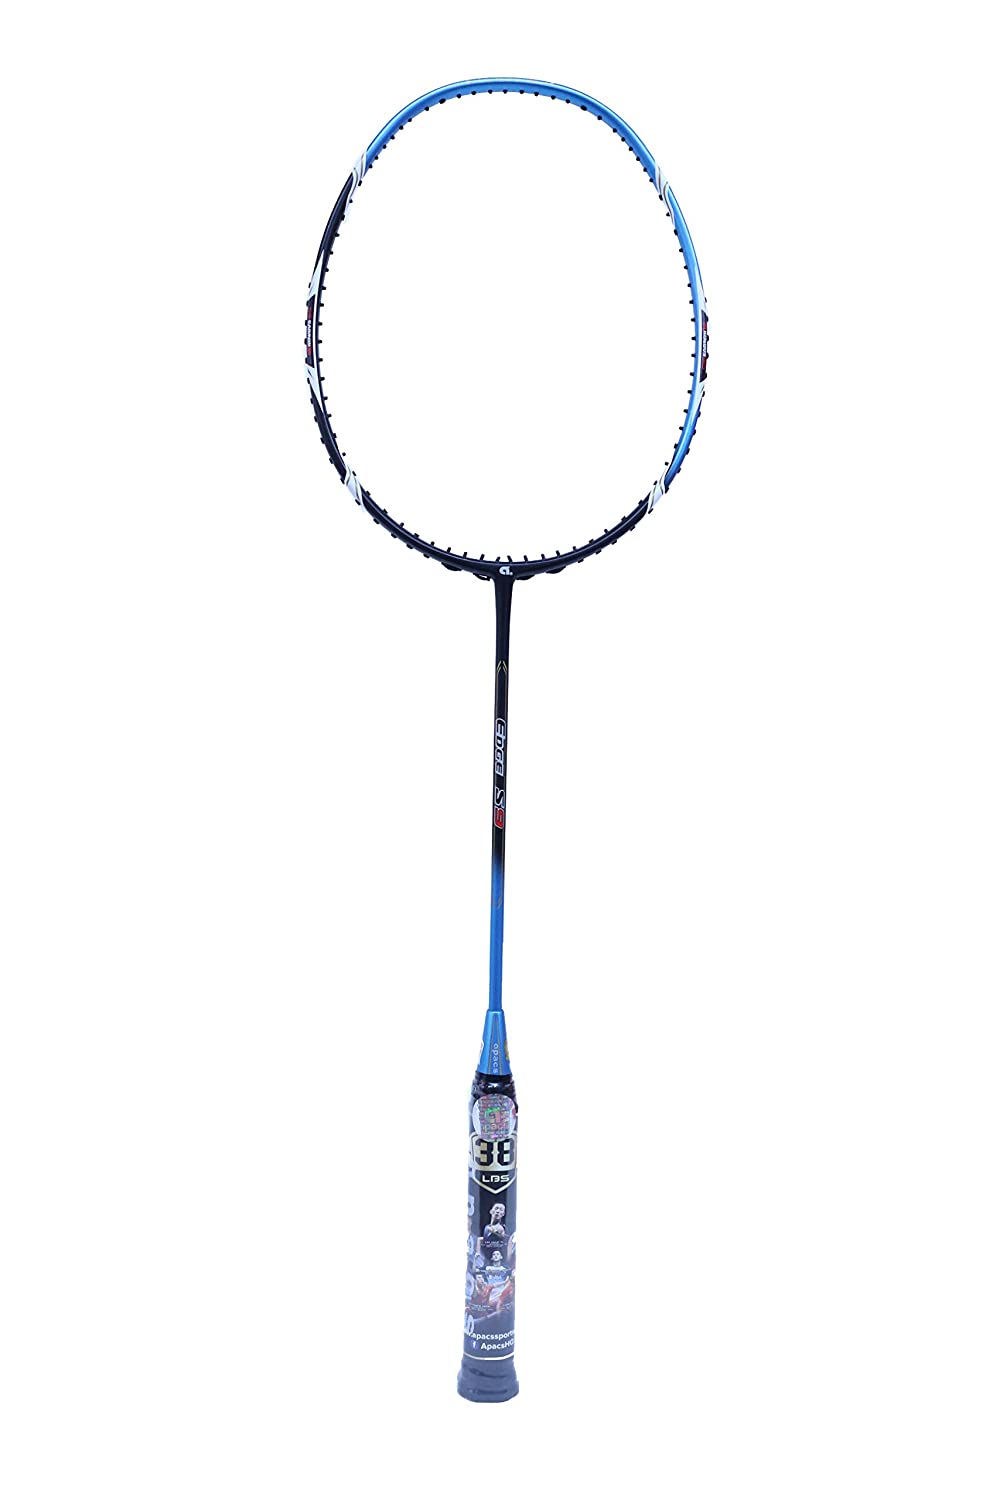 Apacs Edge S9 Badminton Racquet - Unstrung